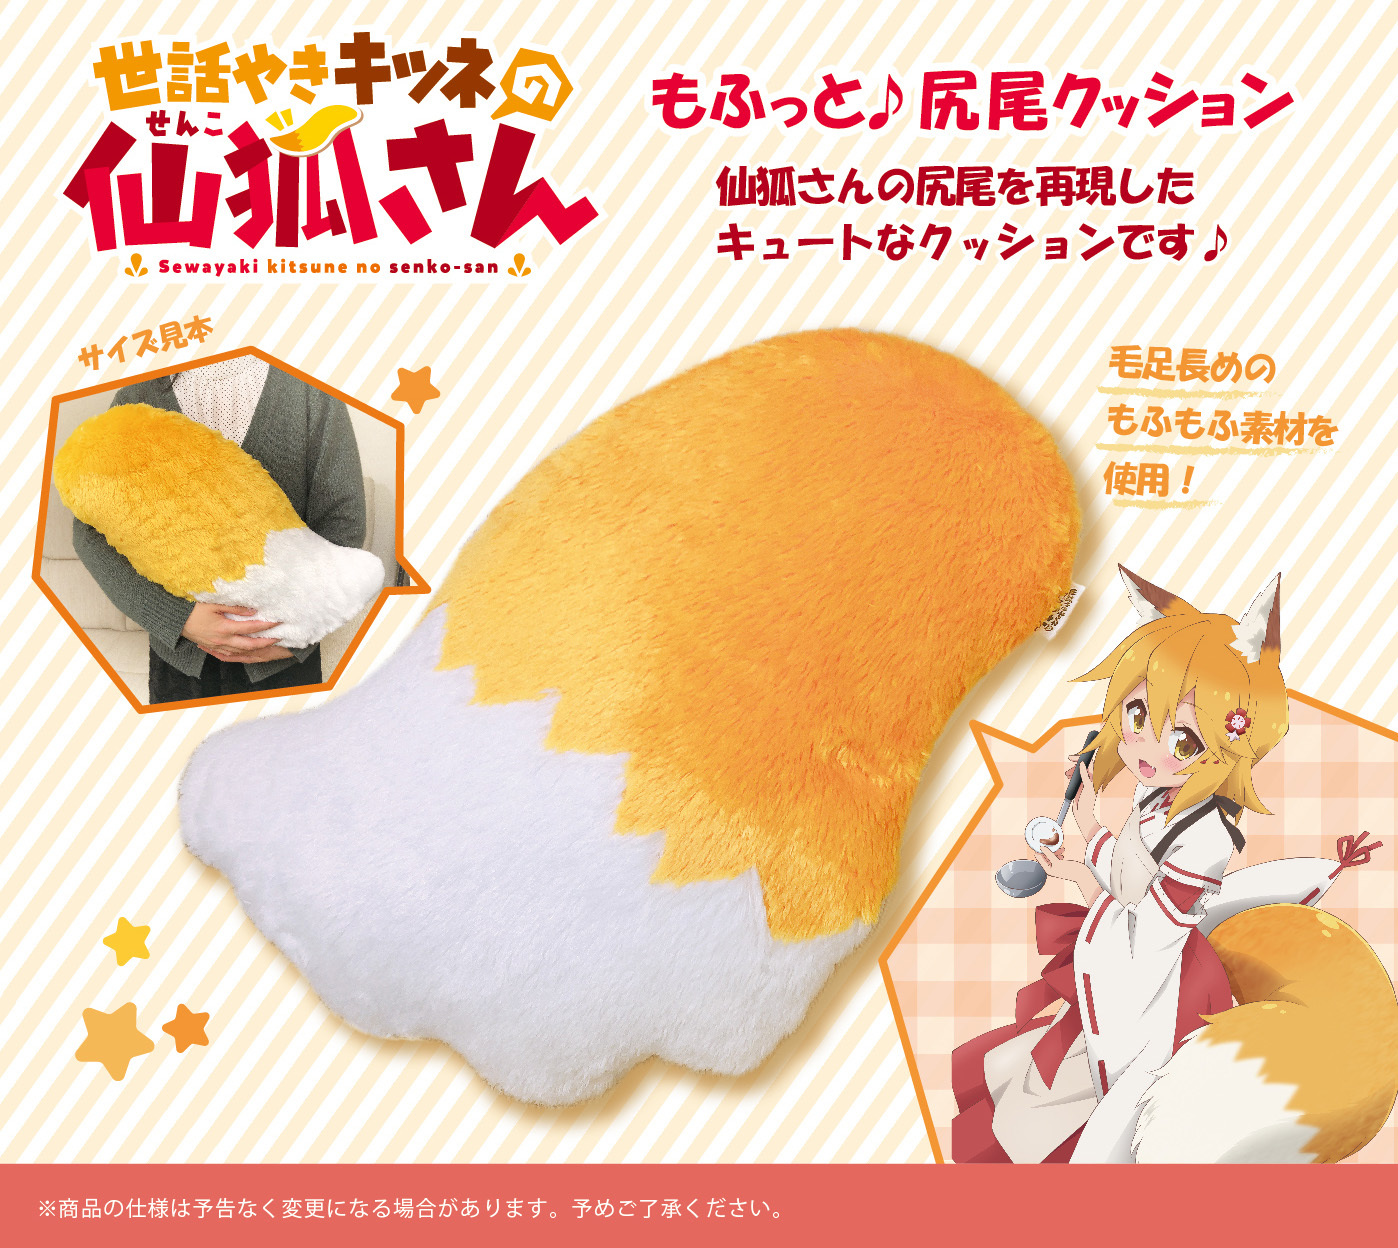 Senko-san Mofutto Tail Cushion